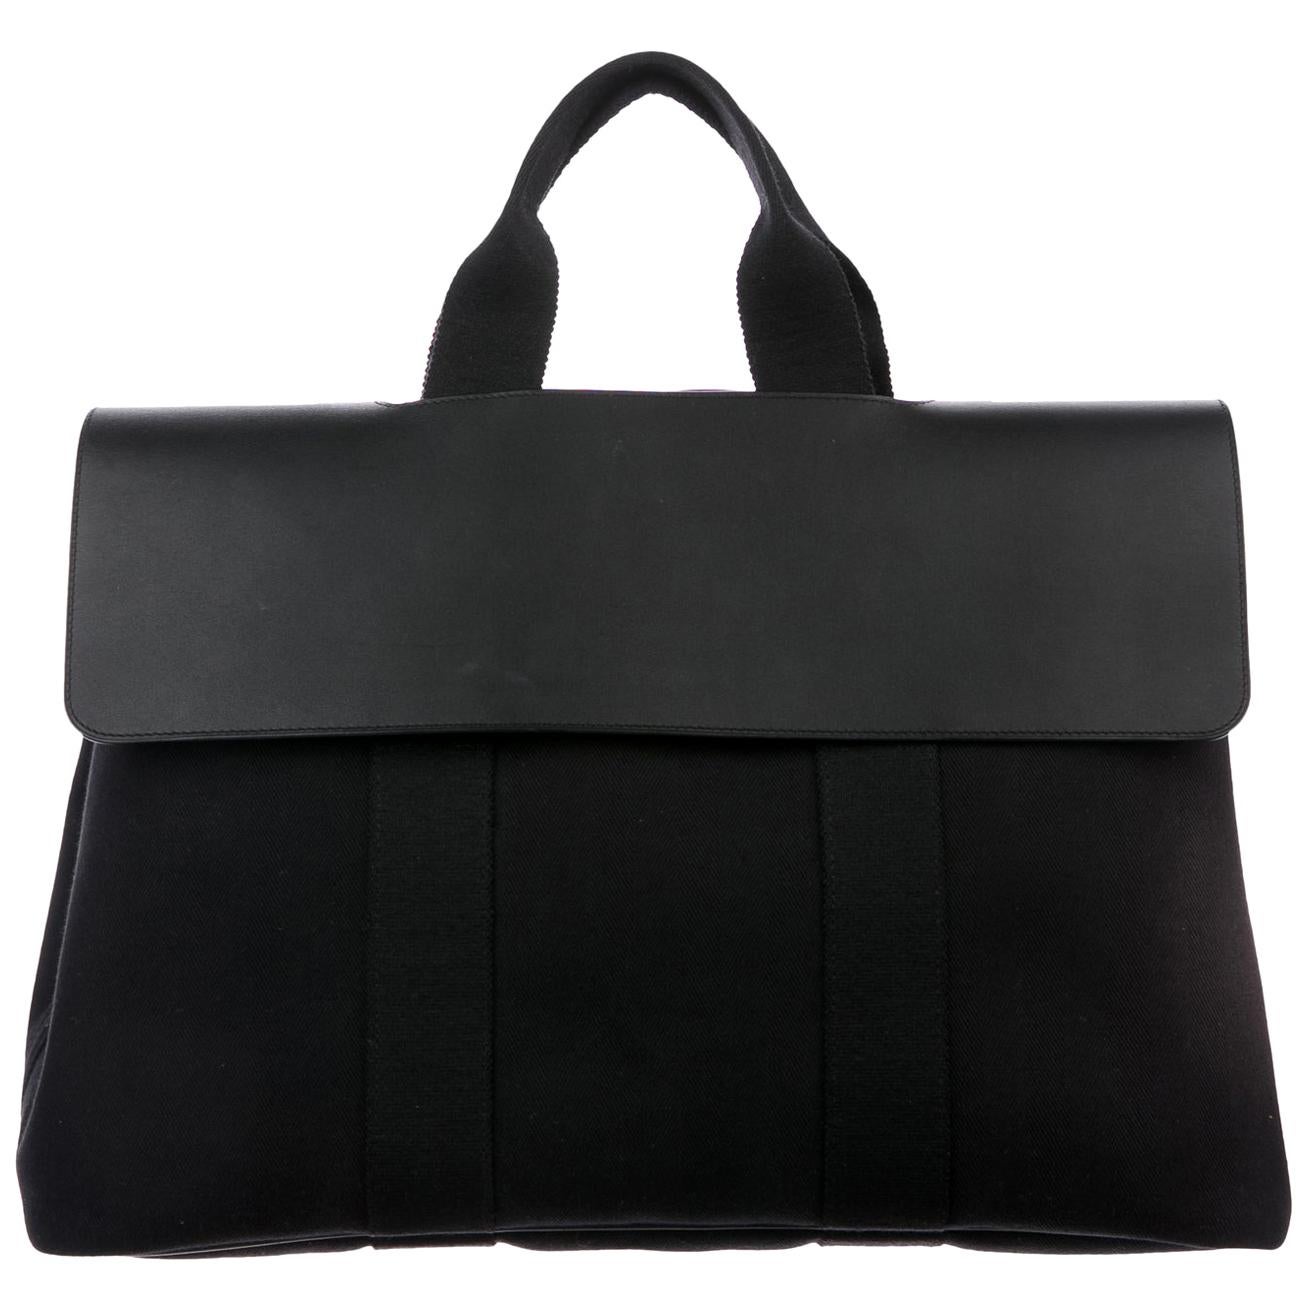 Hermes Black Canvas Leather Trim Top Carryall Handle Satchel Tote Bag in Box